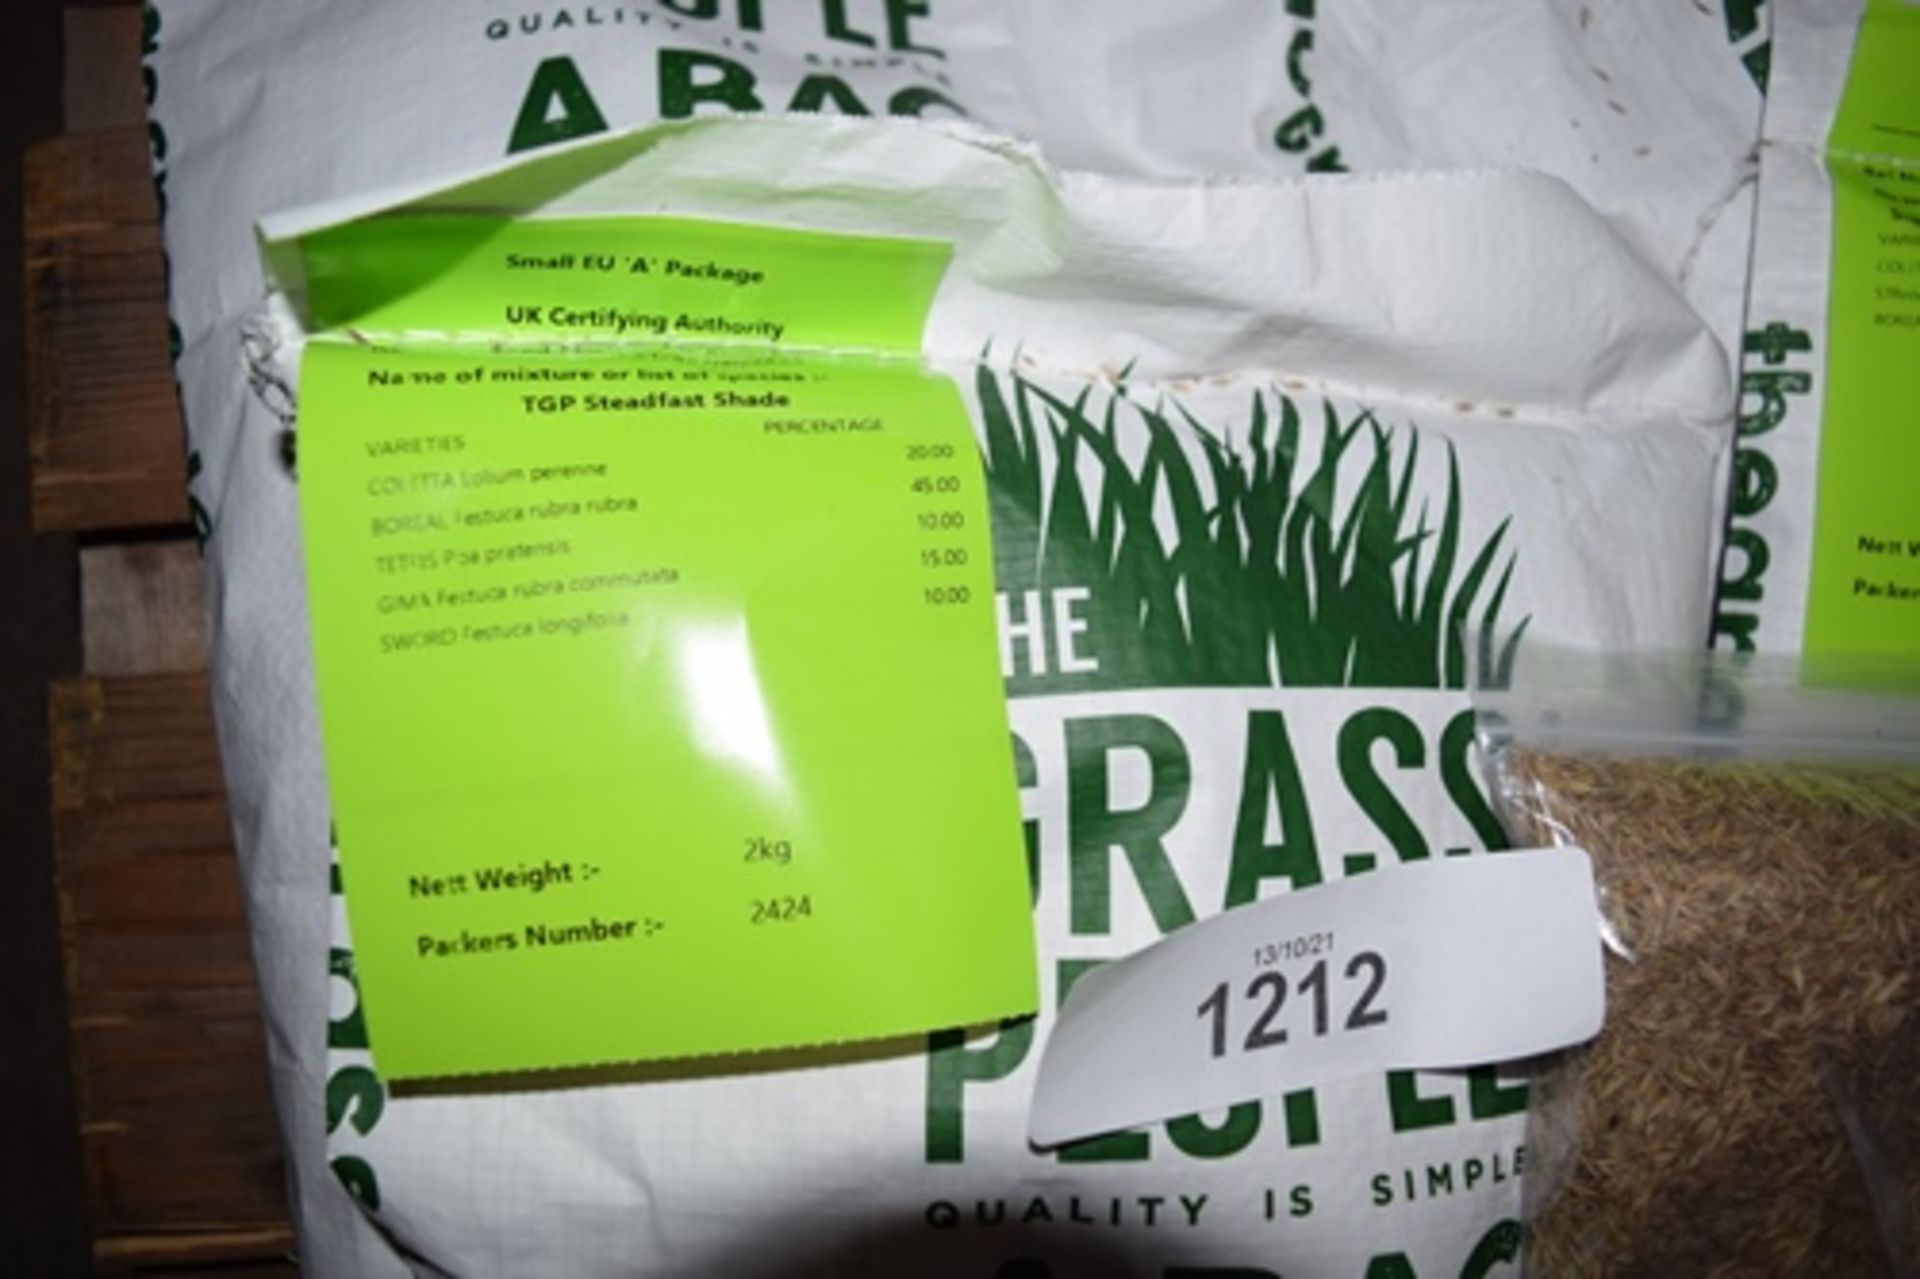 2 x 2kg sacks of The Grass People TGP Steadfast shade,2 x 2kg sacks of The Grass People Superstar